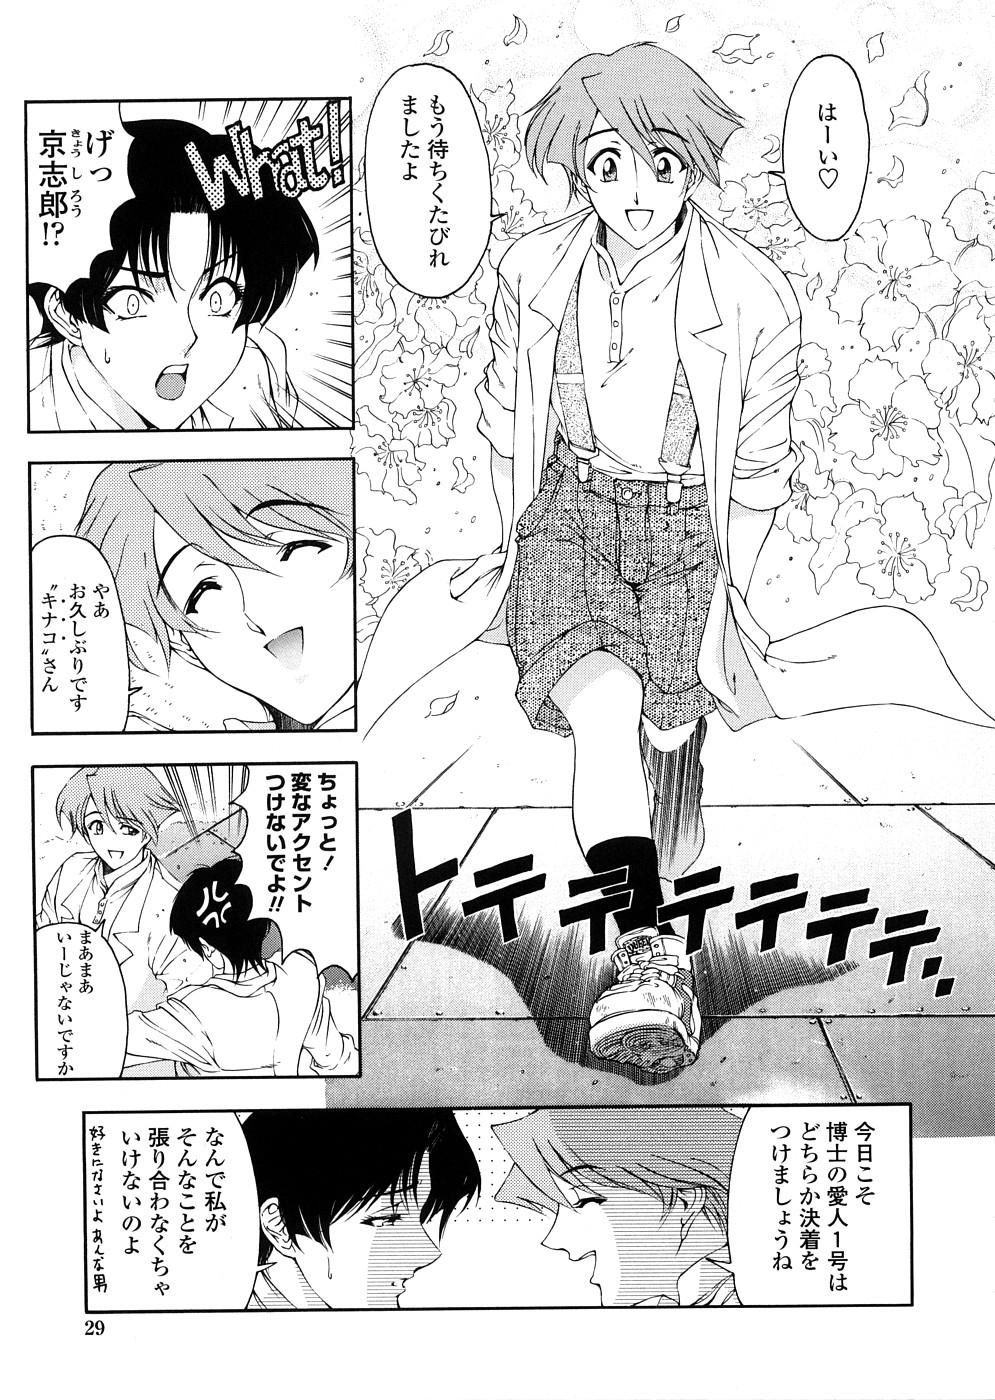 Hakase no Strange na Aijou - Hiroshi's Strange Love 28